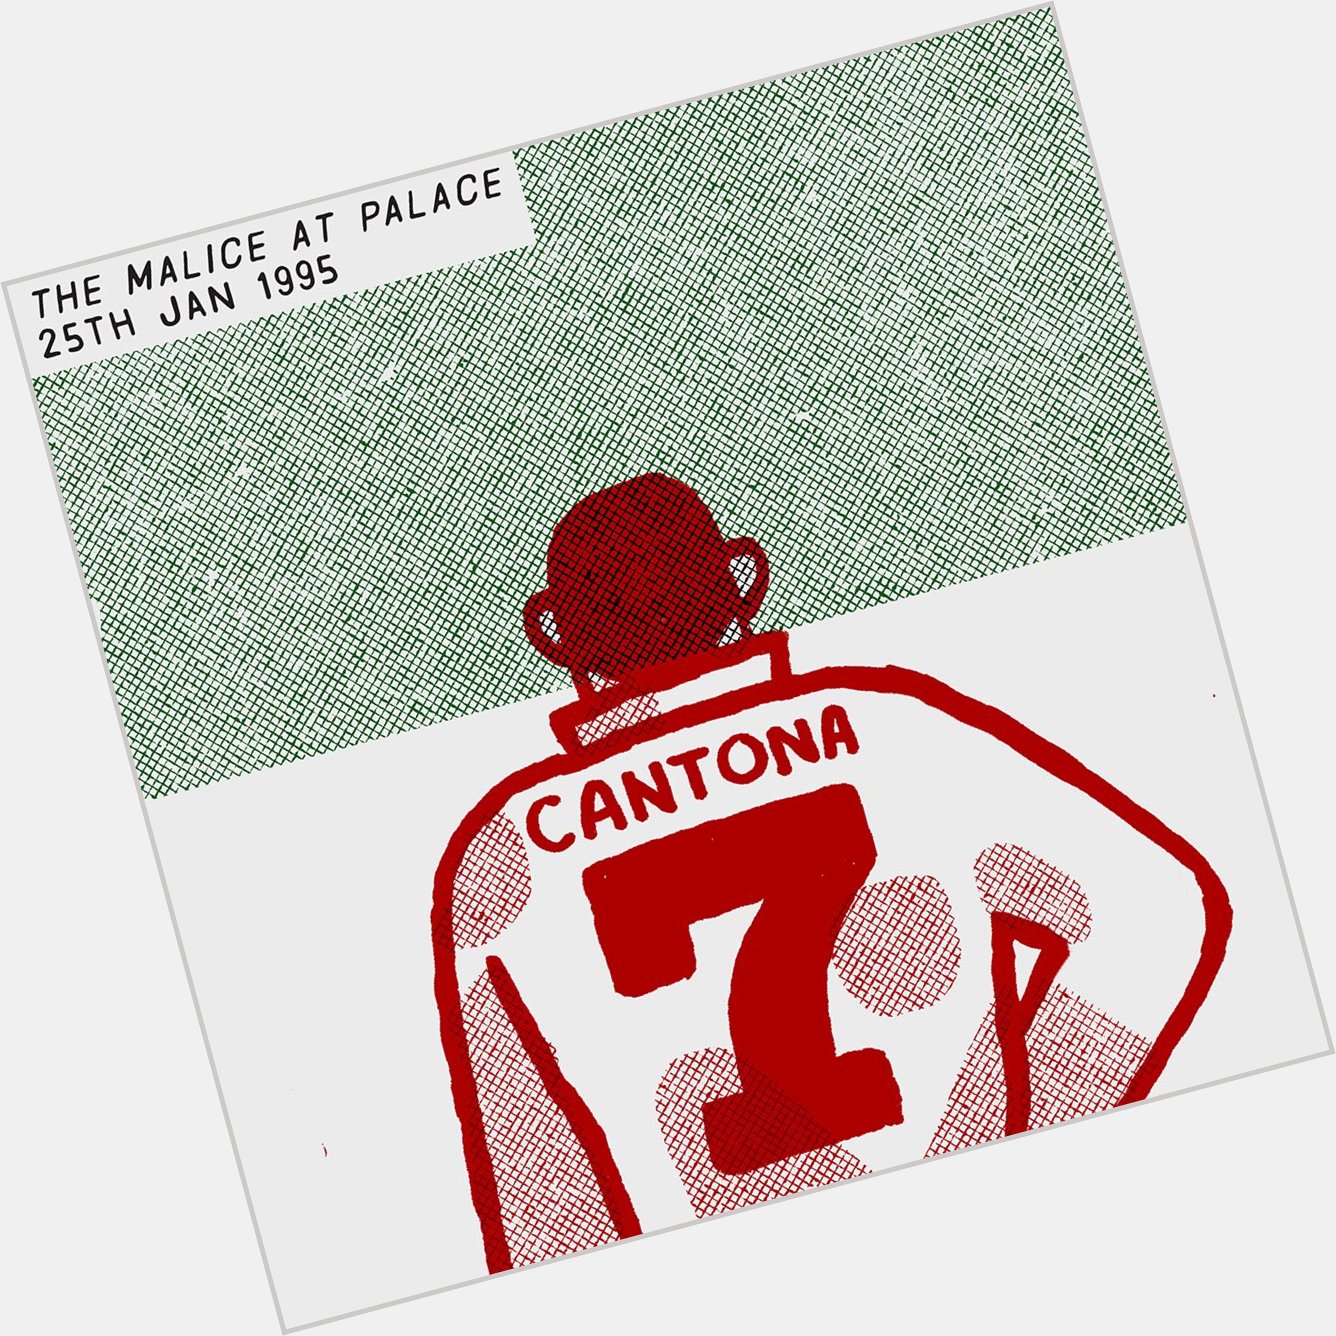 Happy Birthday, Eric Cantona. 
Illustrations by Ken lizuka. 